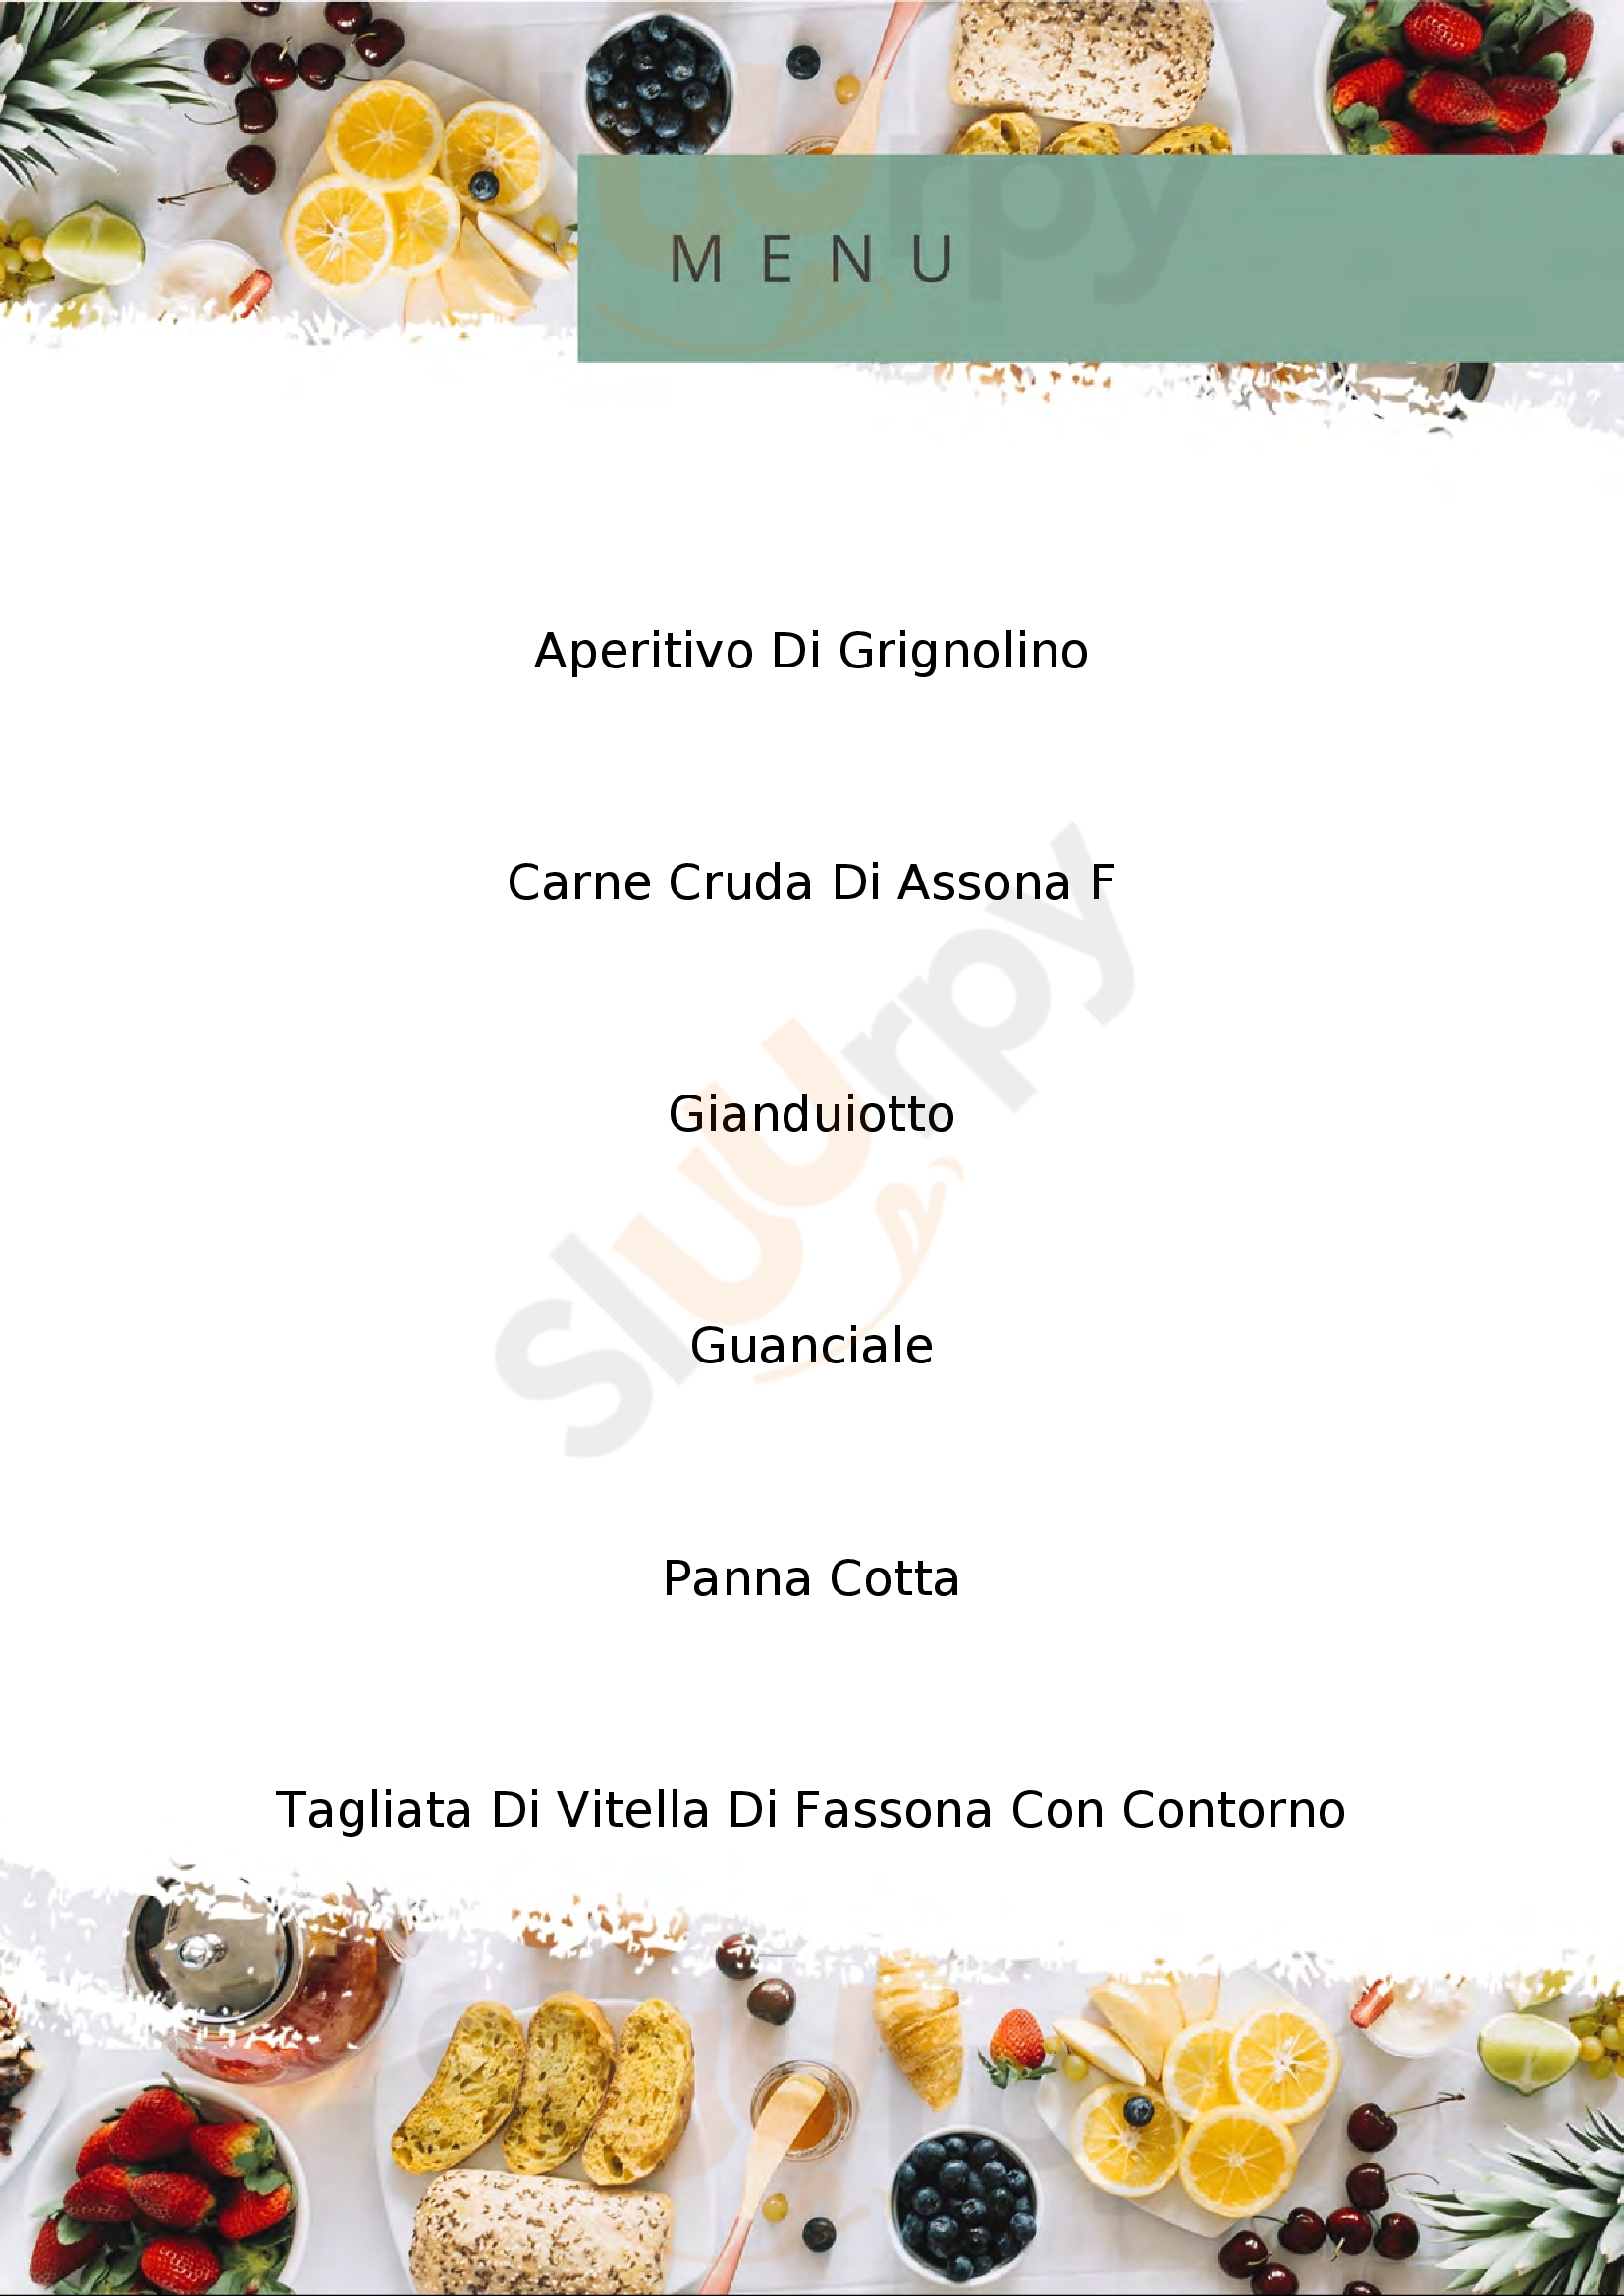 La Bottega del Grignolino Portacomaro menù 1 pagina